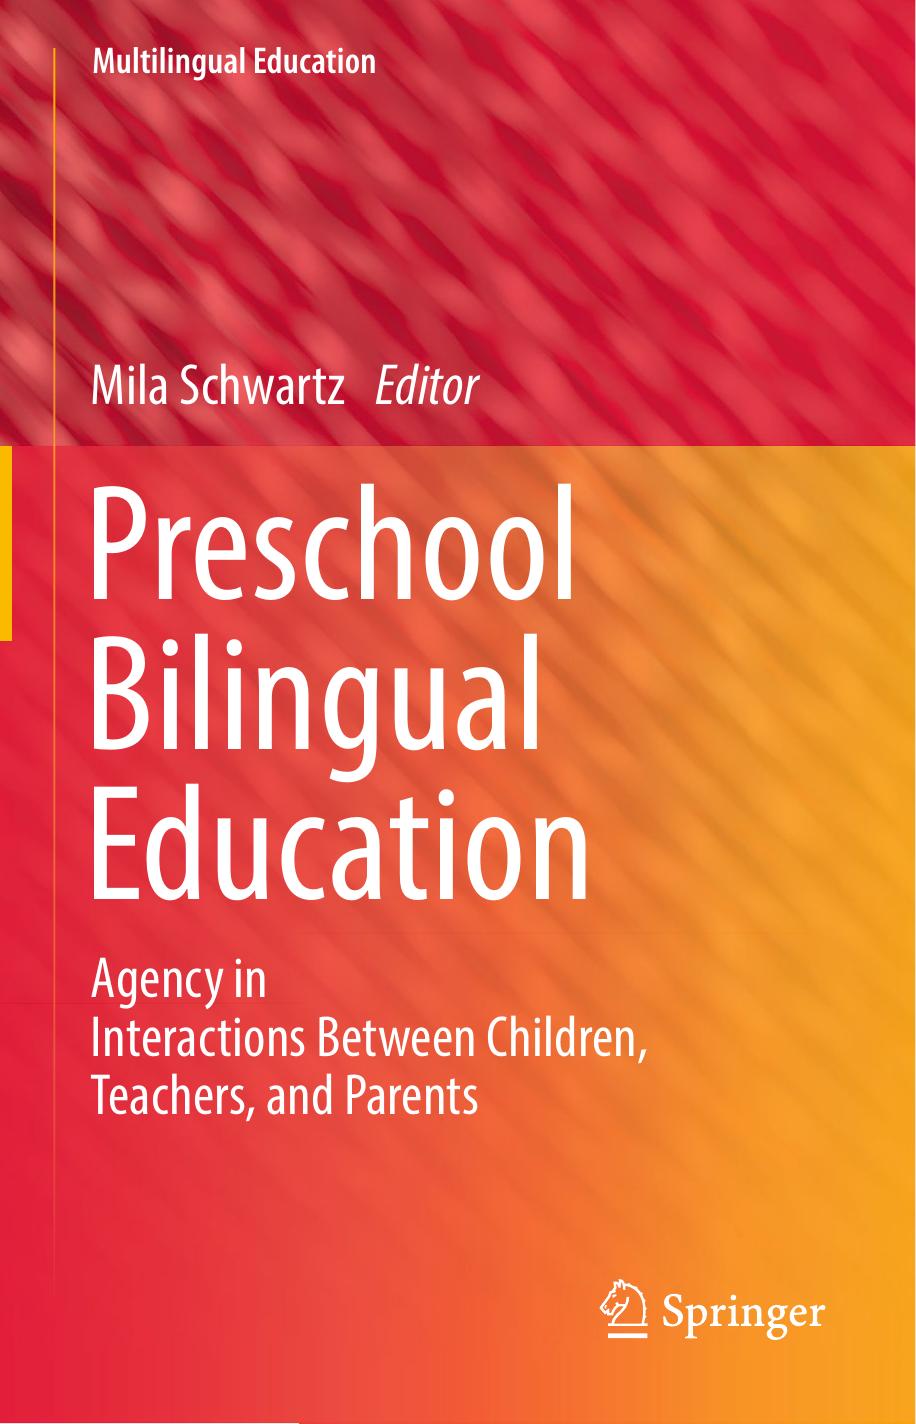 Preschool Bilingual Education by Mila Schwartz